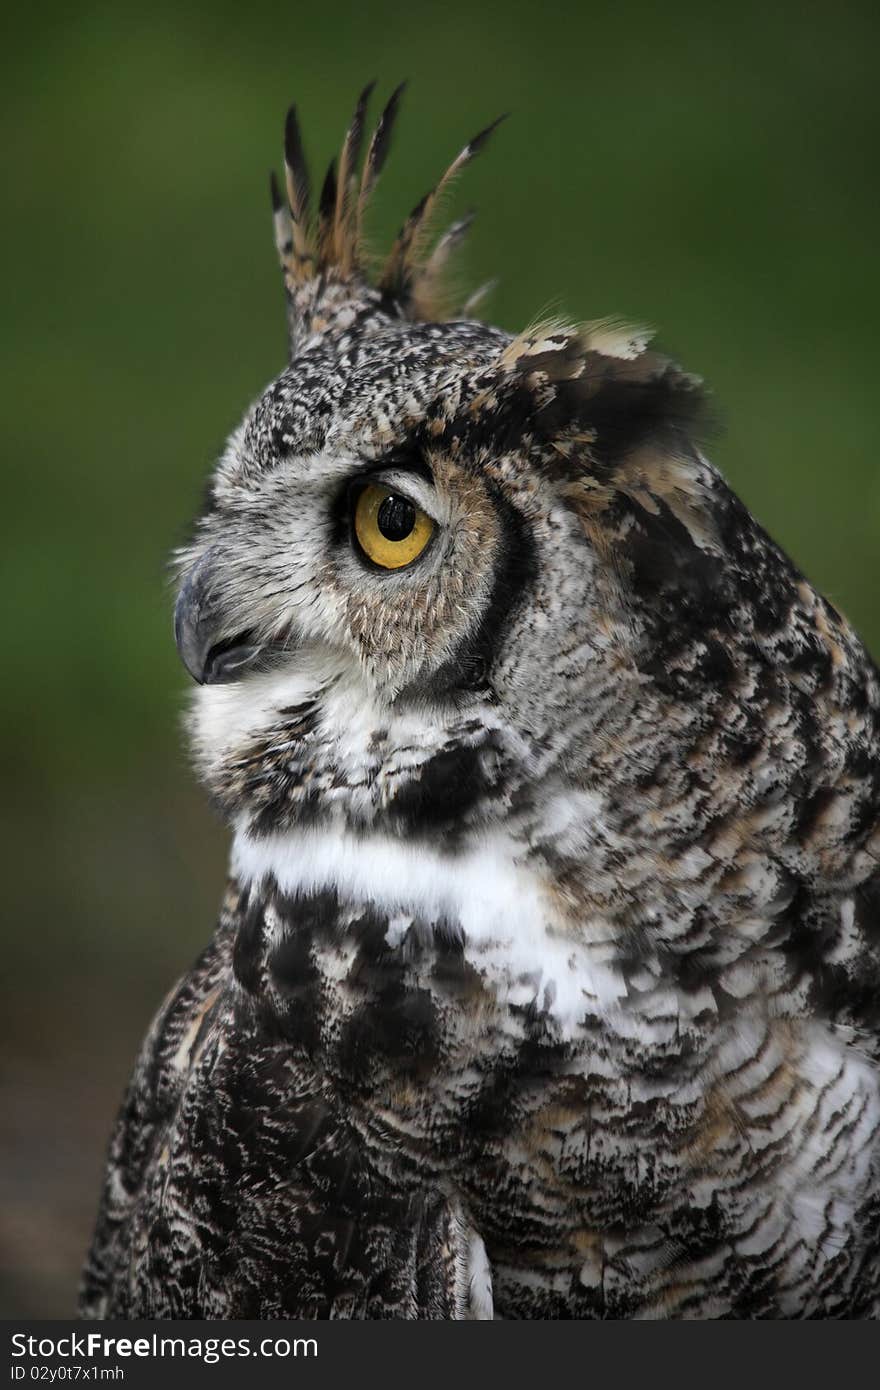 Beautiful Great horned owl eyes